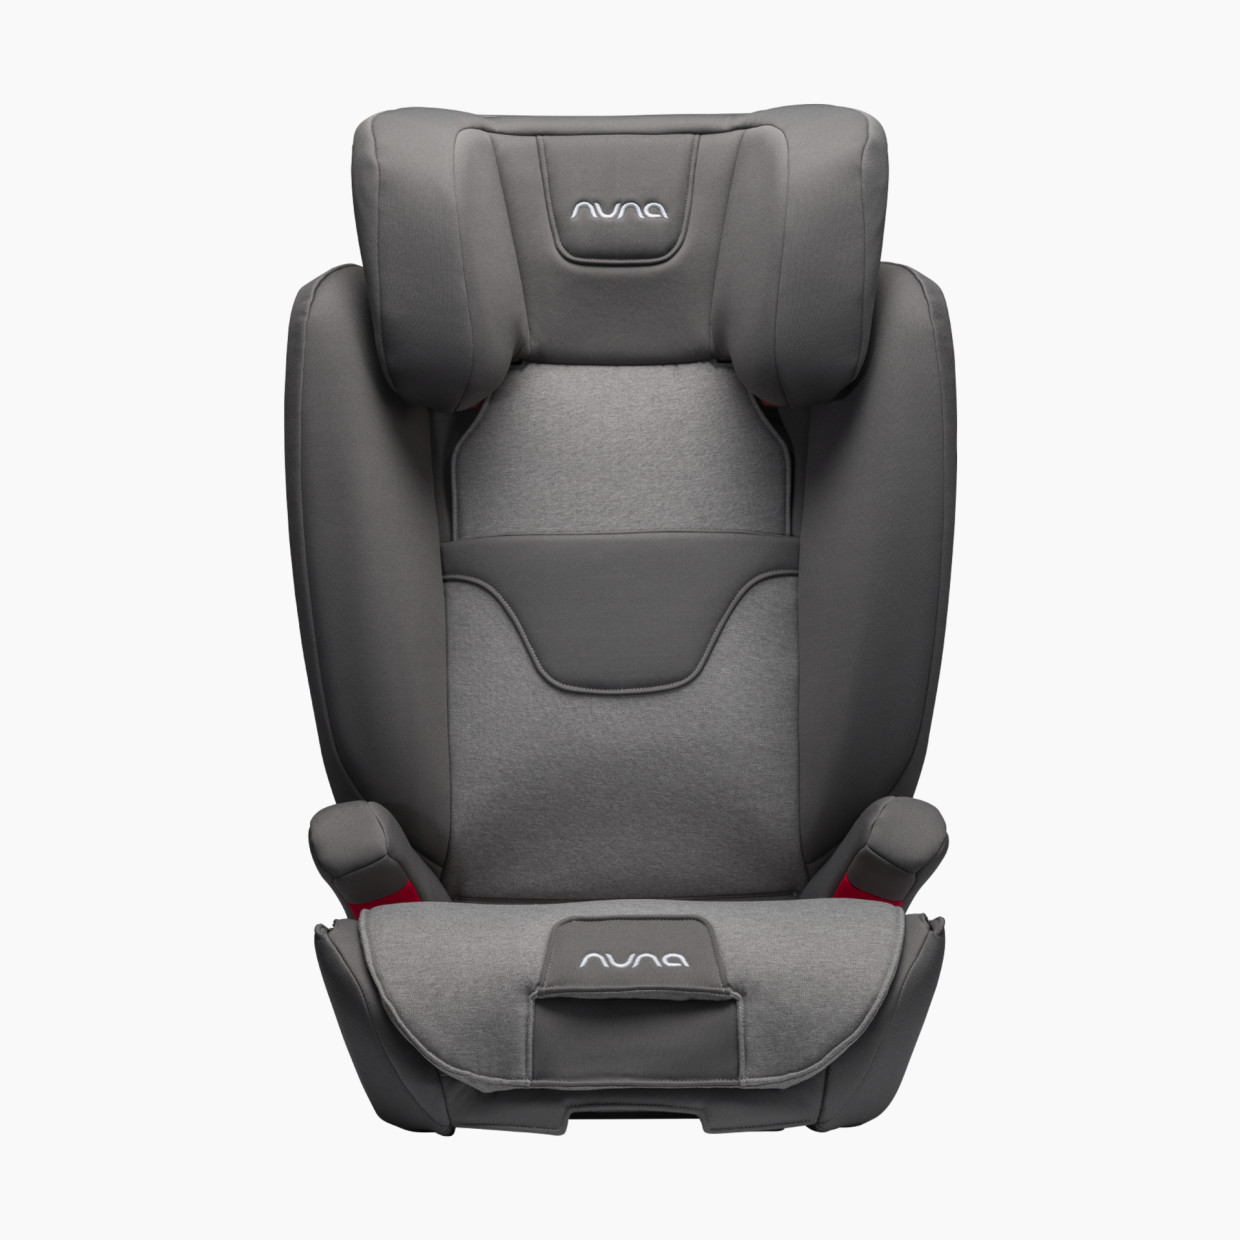 Nuna AACE Booster Car Seat - Granite.